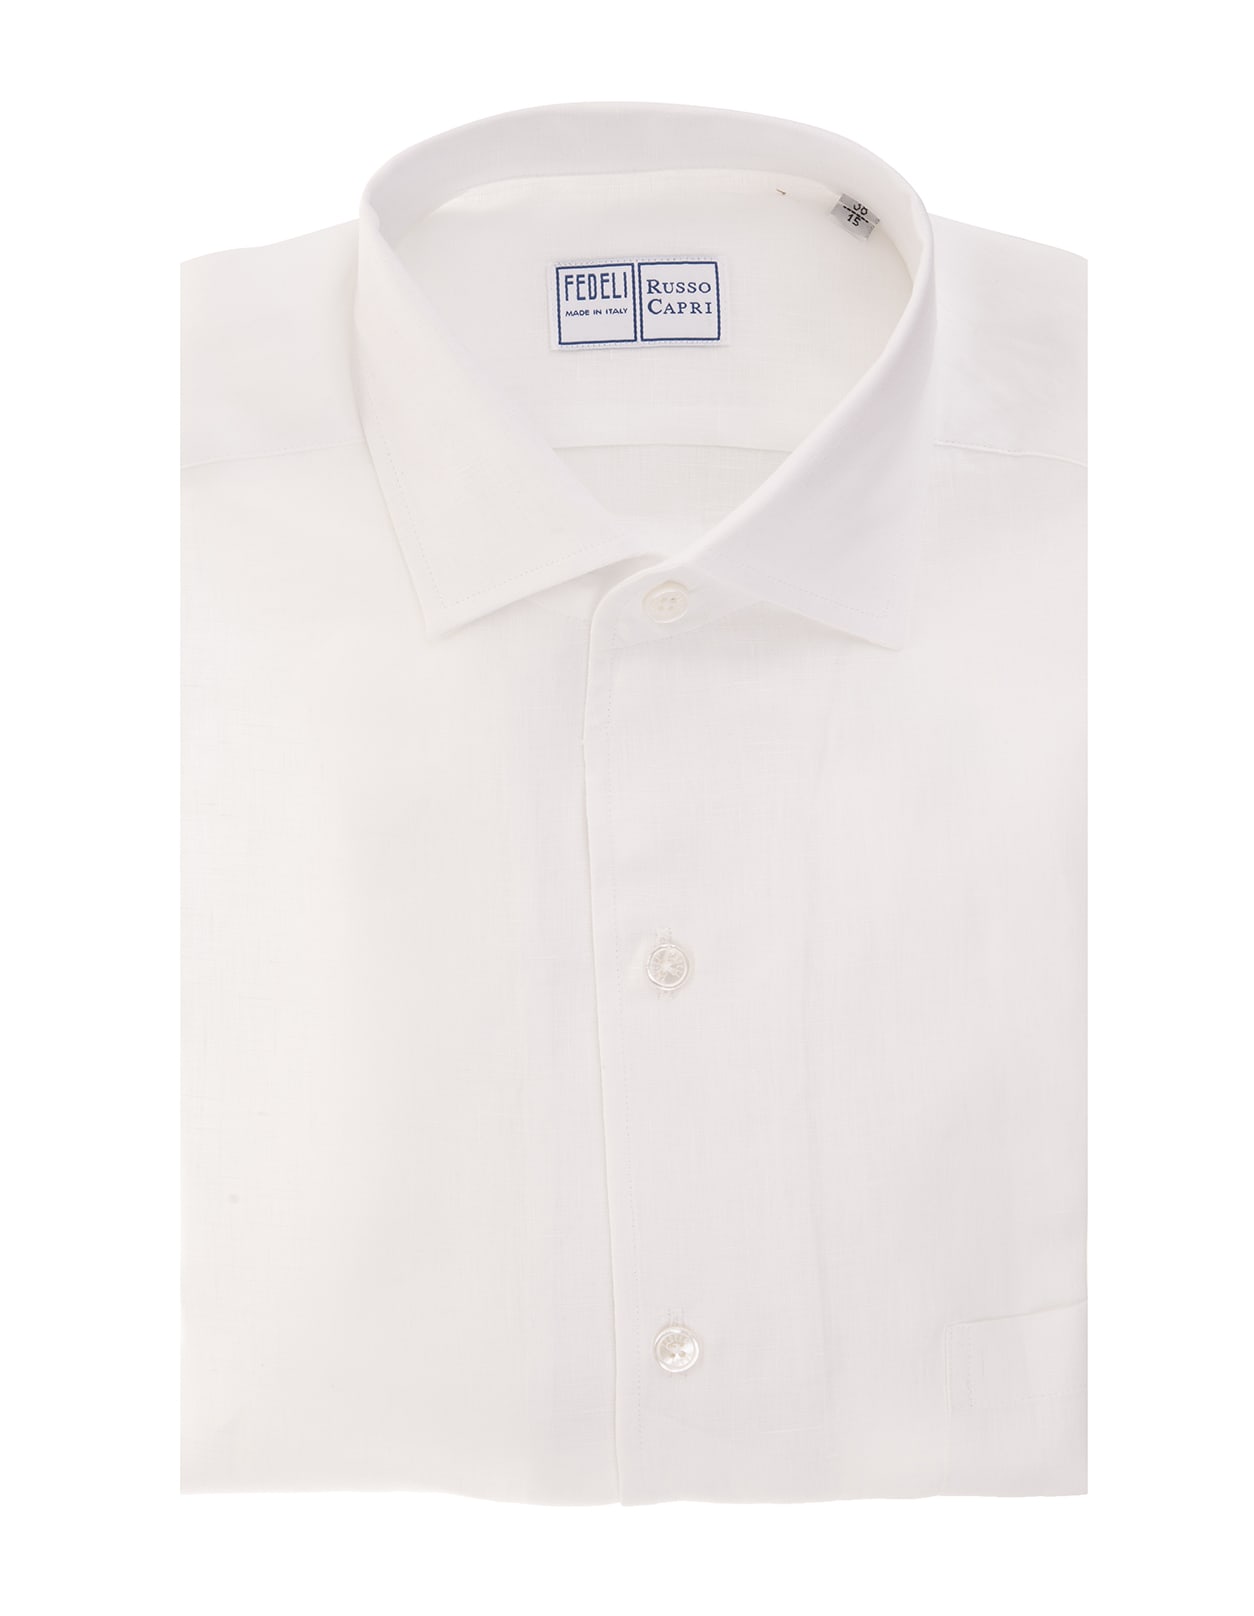 Fedeli Man Classic Shirt In Lightweight White Cotton